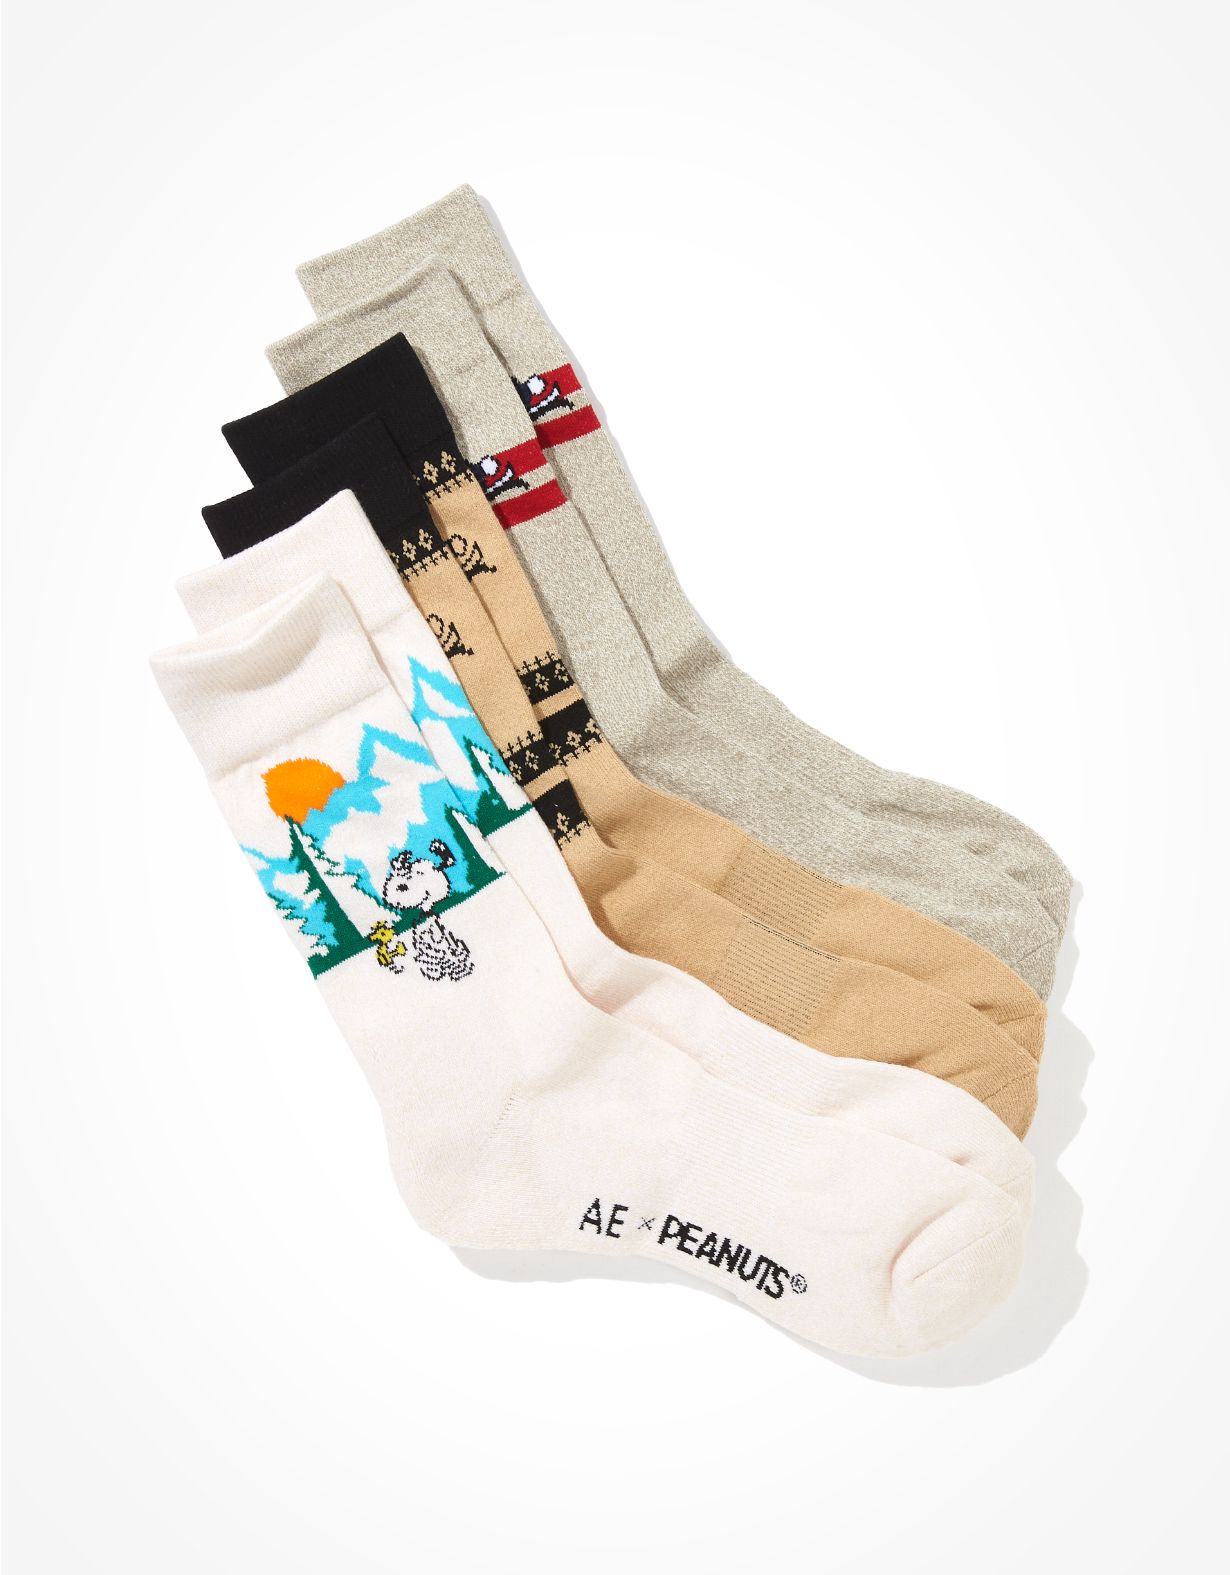 AE x Peanuts Crew Socks 3-Pack